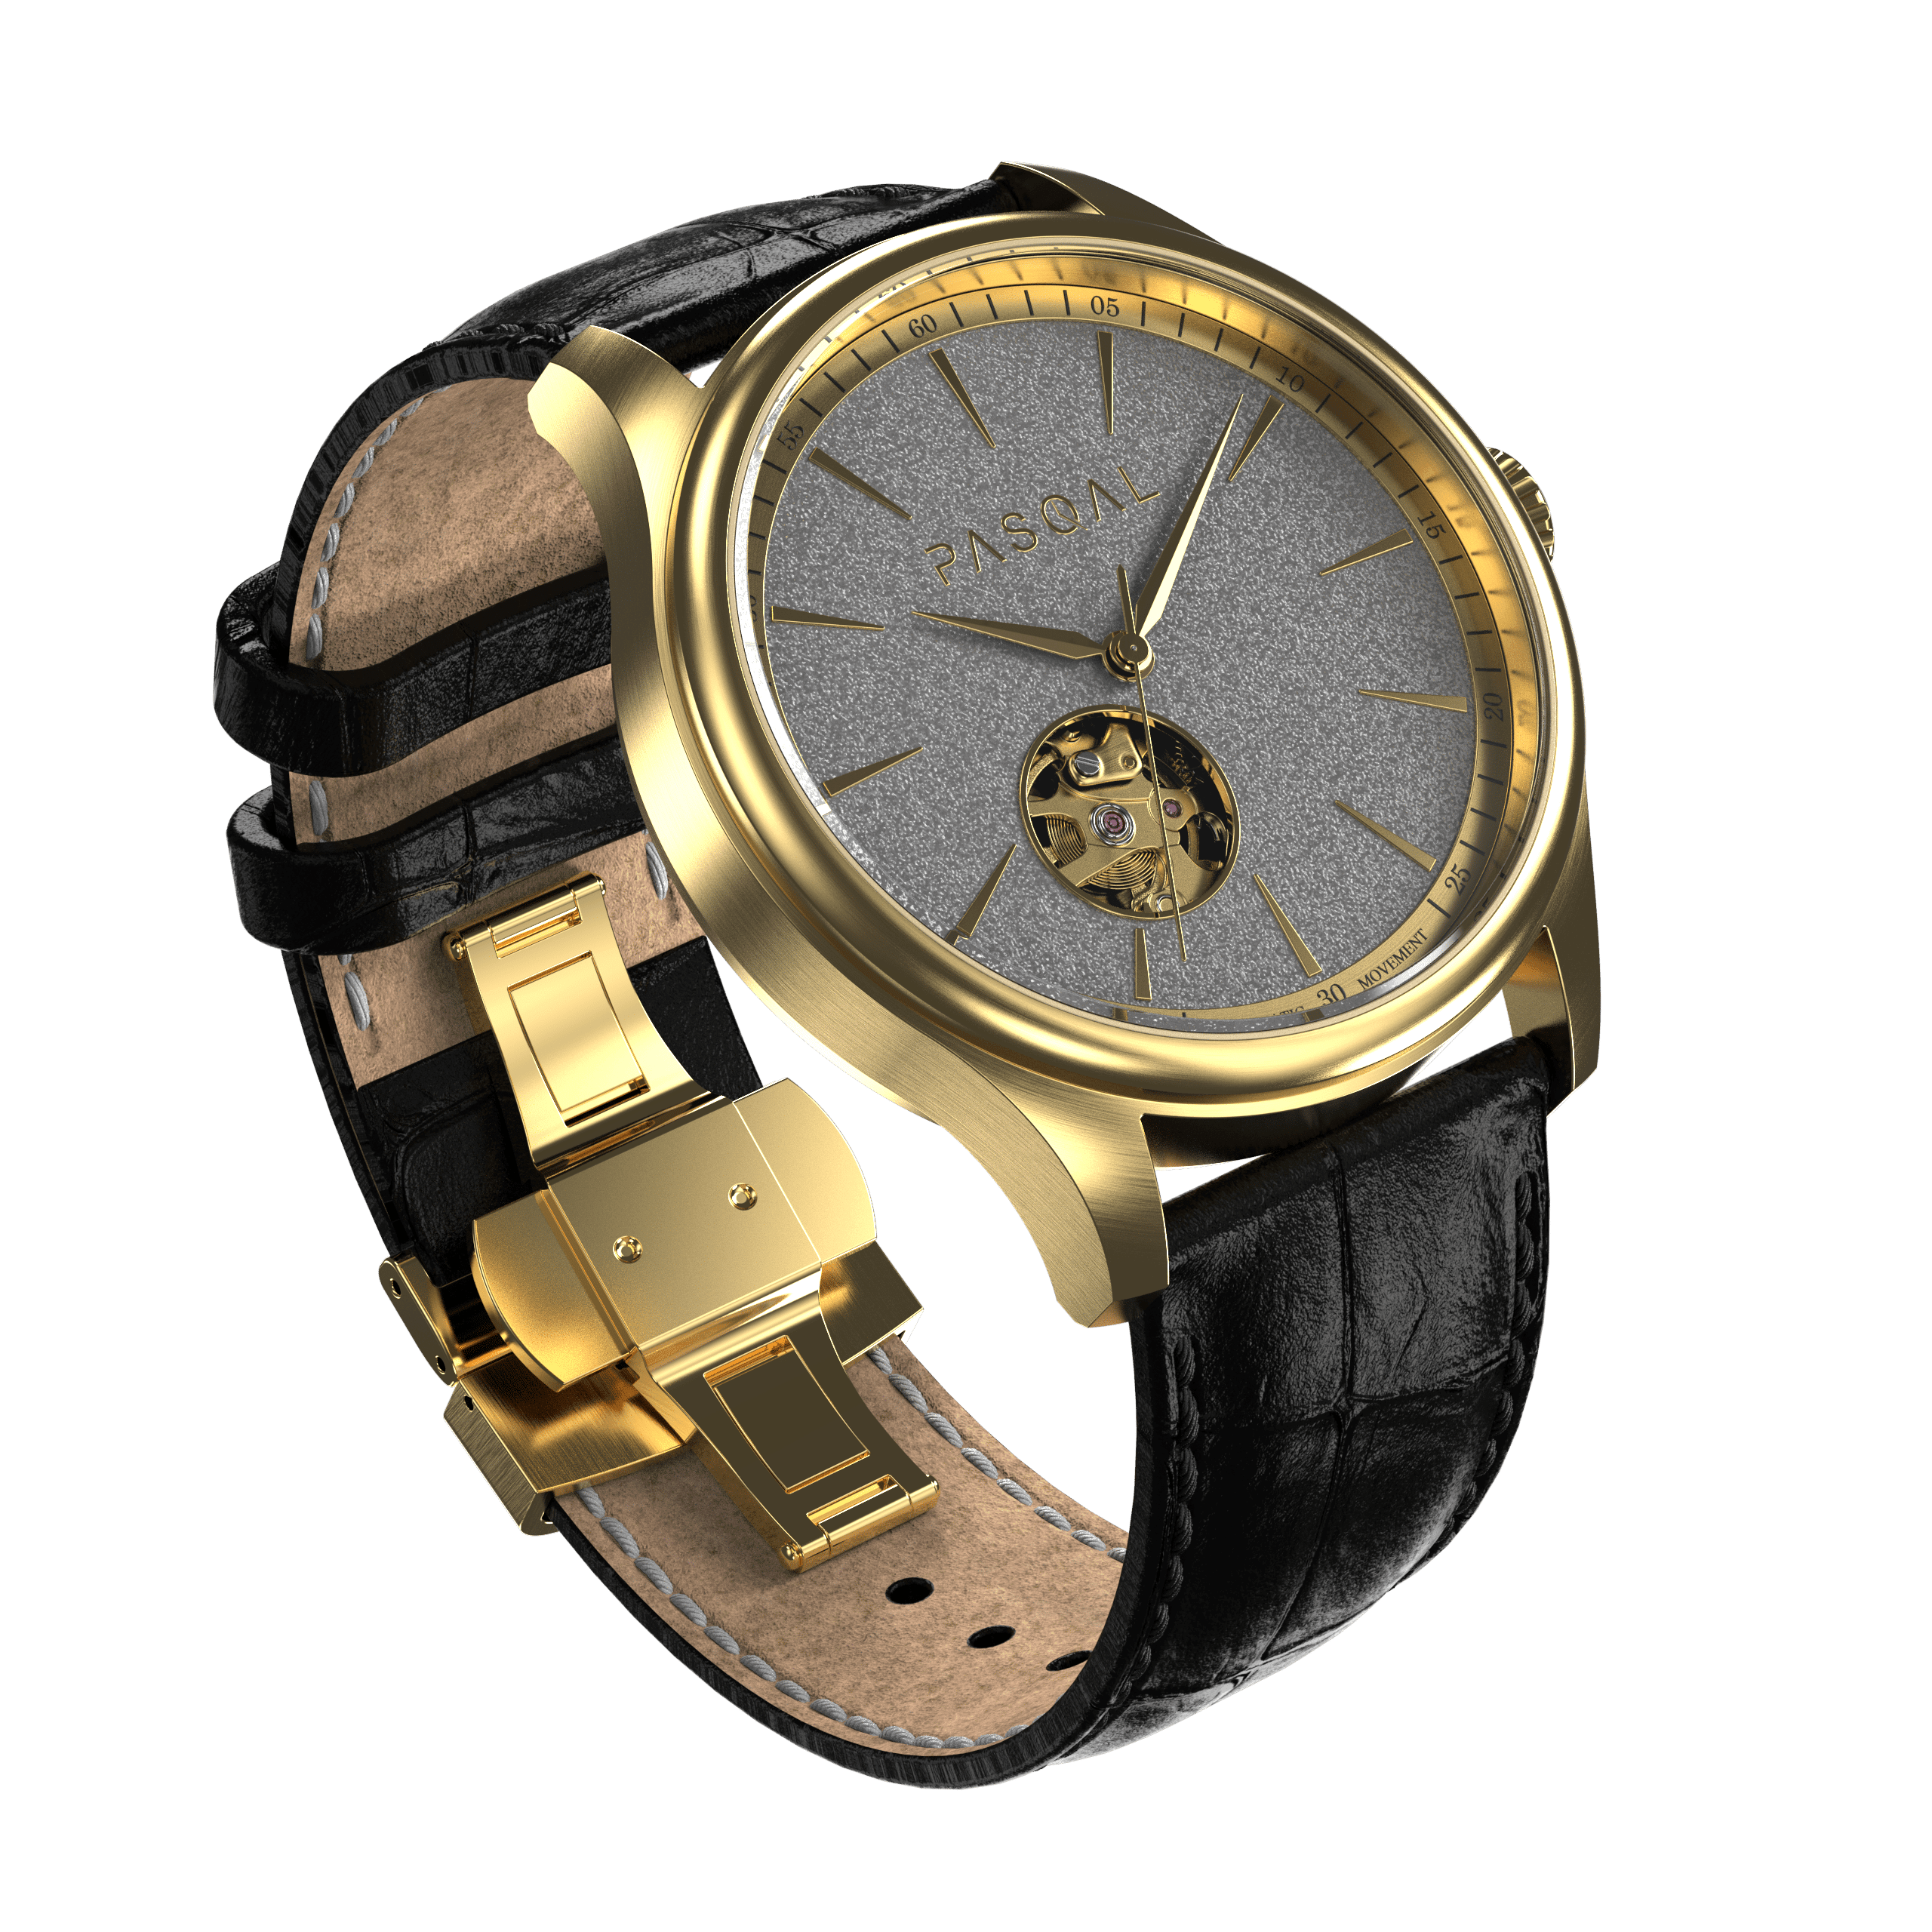 Wilhelm 42 Gold/Grey - Pasqal Watches